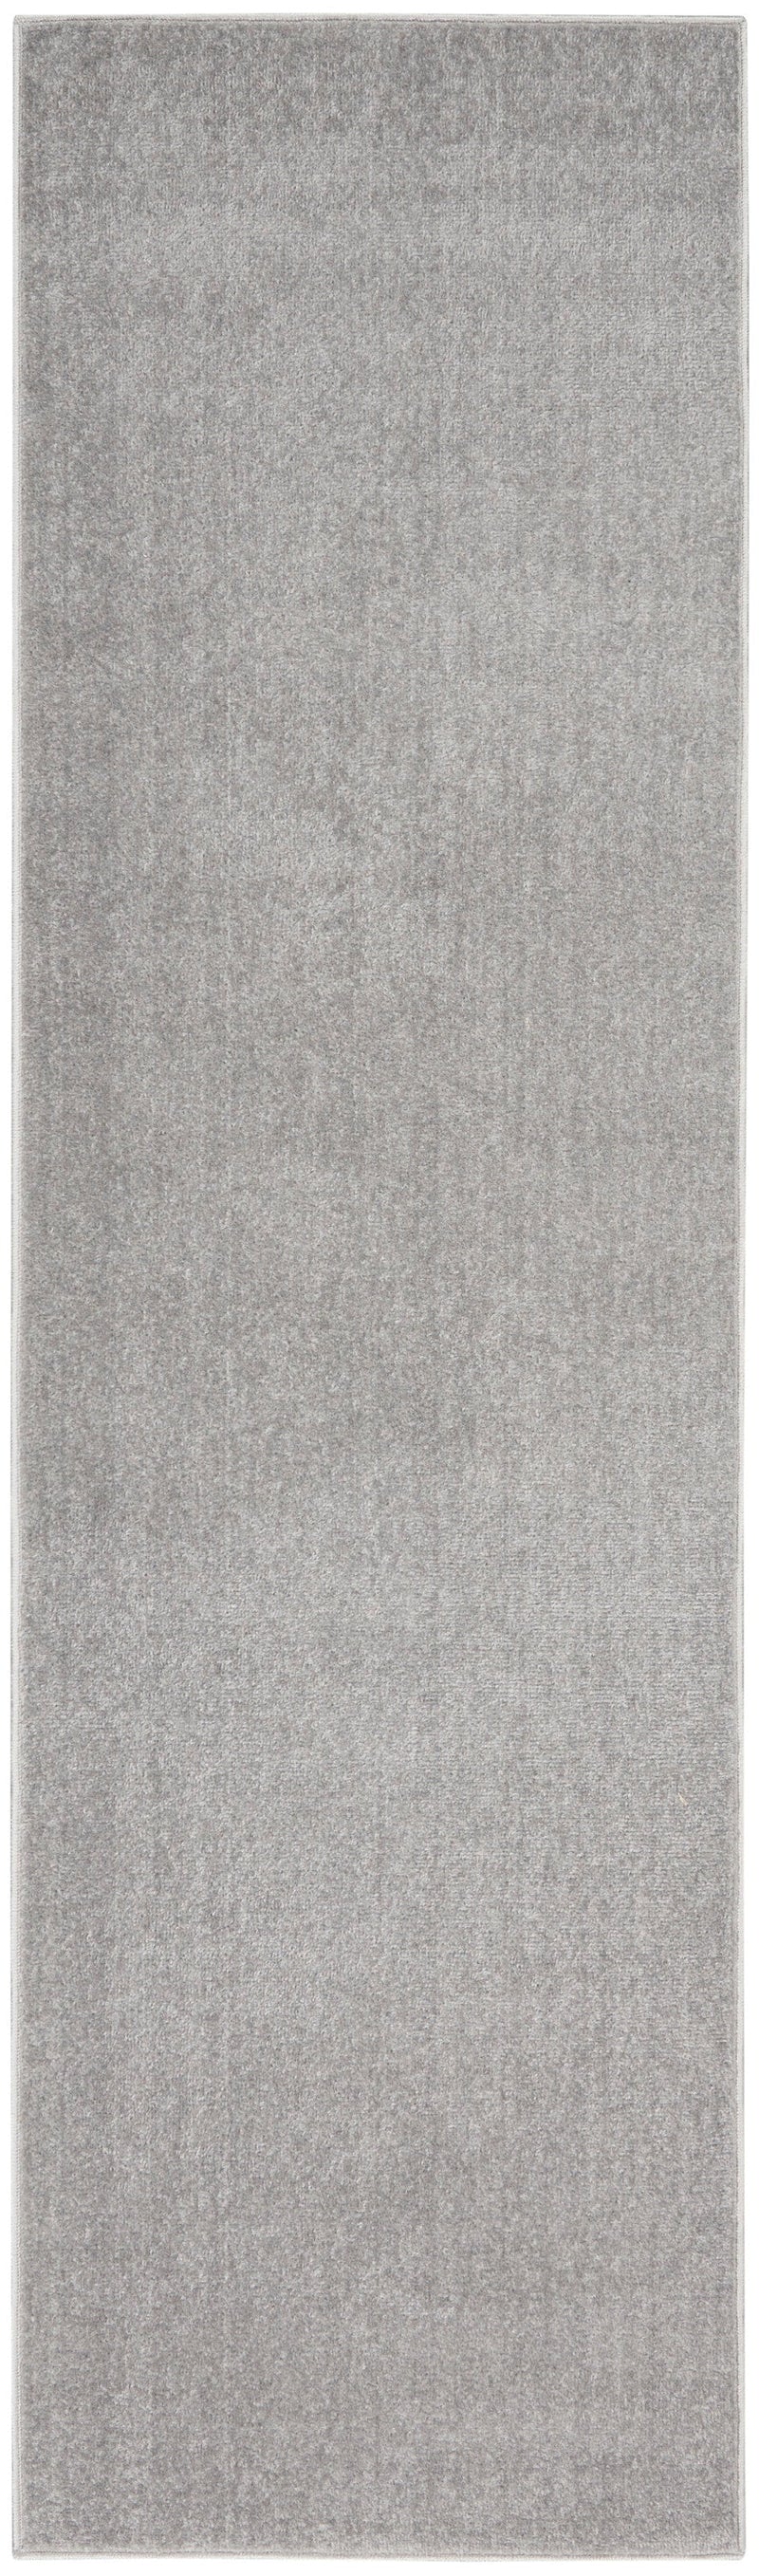 media image for nourison essentials silver grey rug by nourison 99446062369 redo 4 242